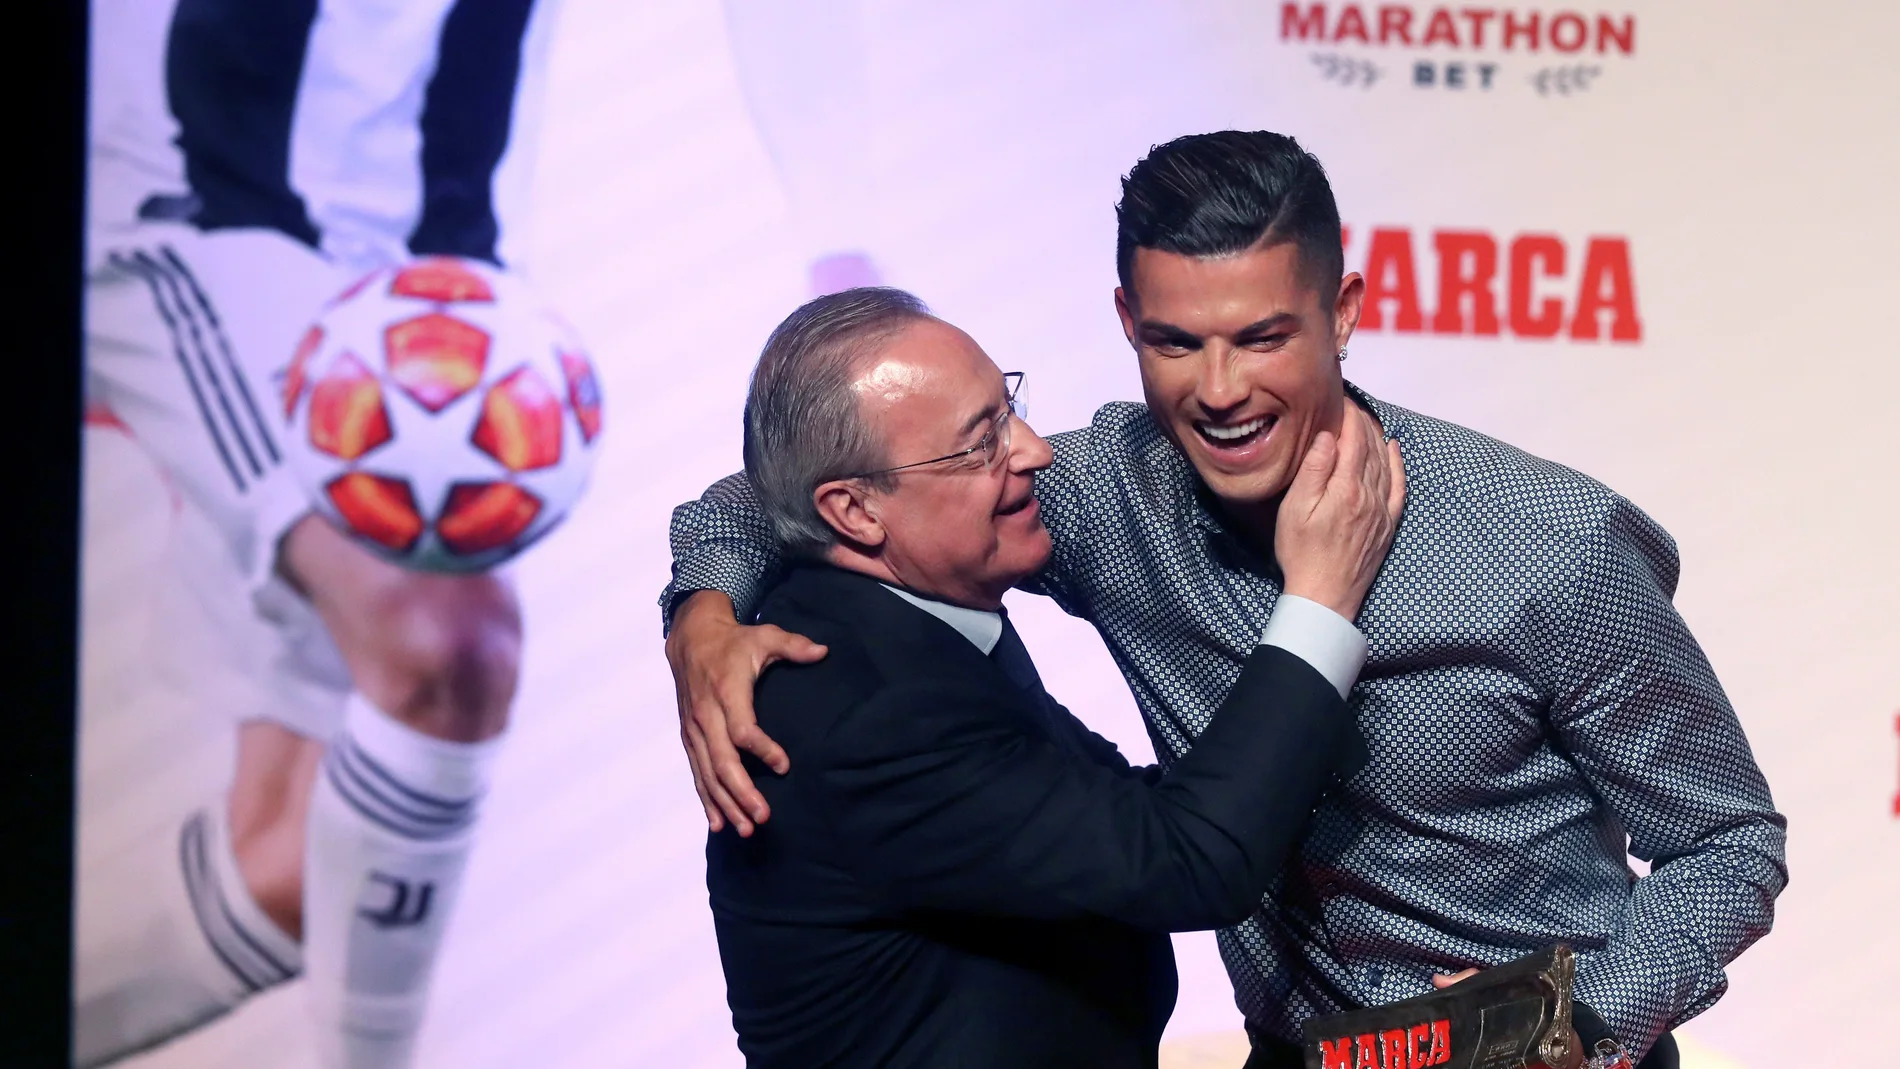 Florentino Pérez y Cristiano Ronaldo se abrazan